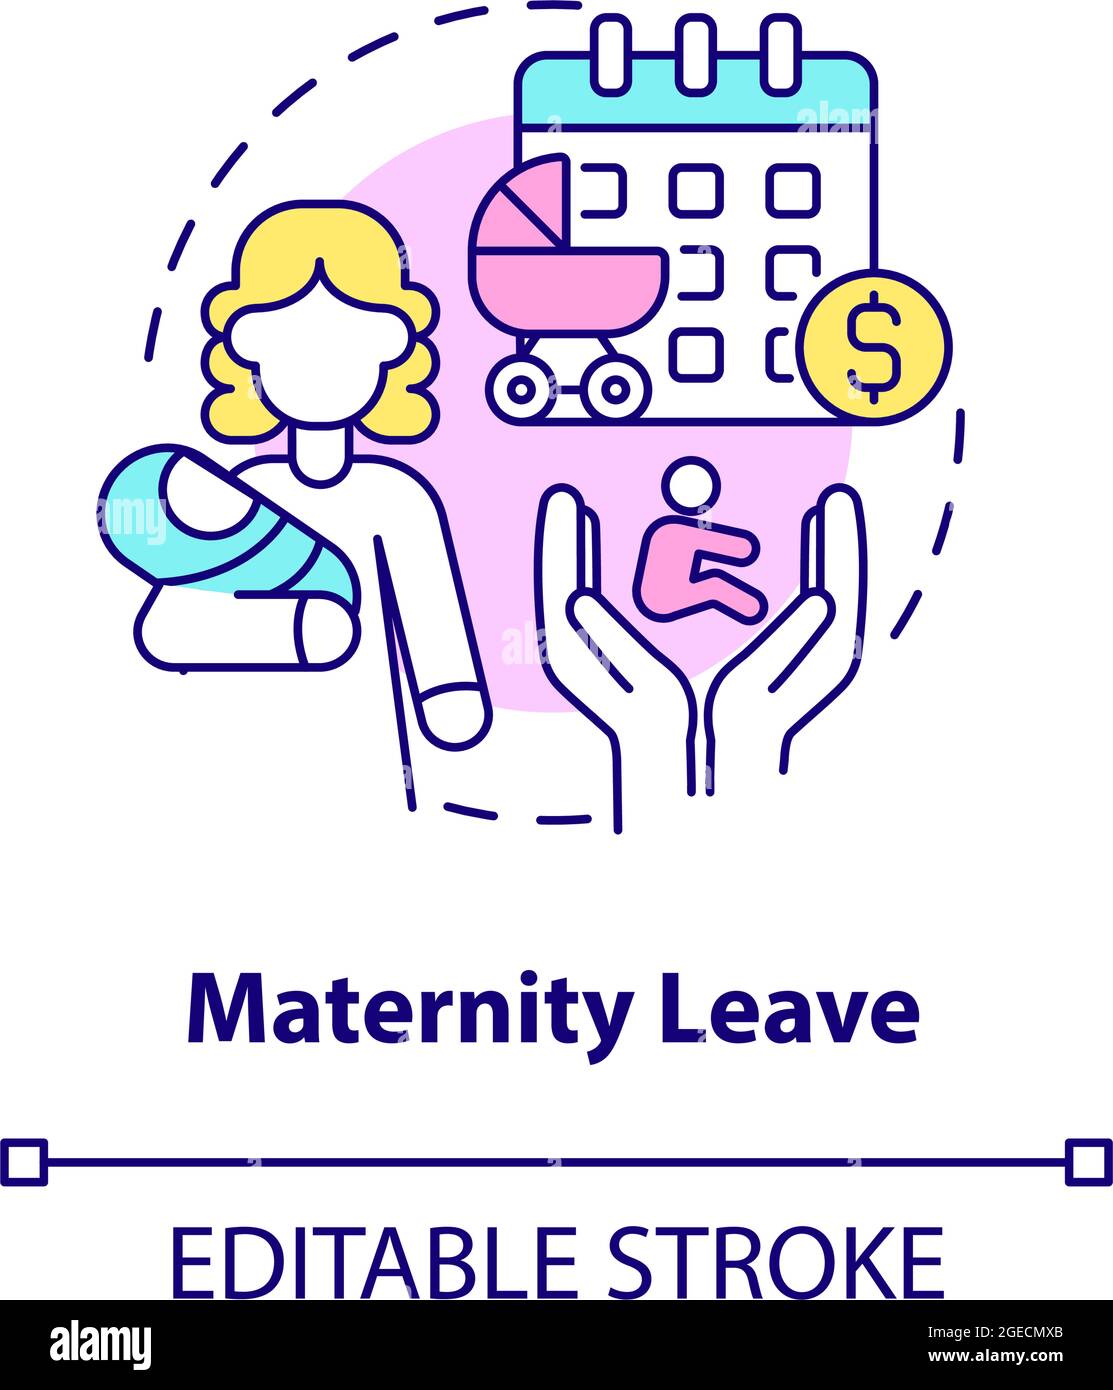 1,100+ Maternity Leave Illustration Stock Illustrations, Royalty